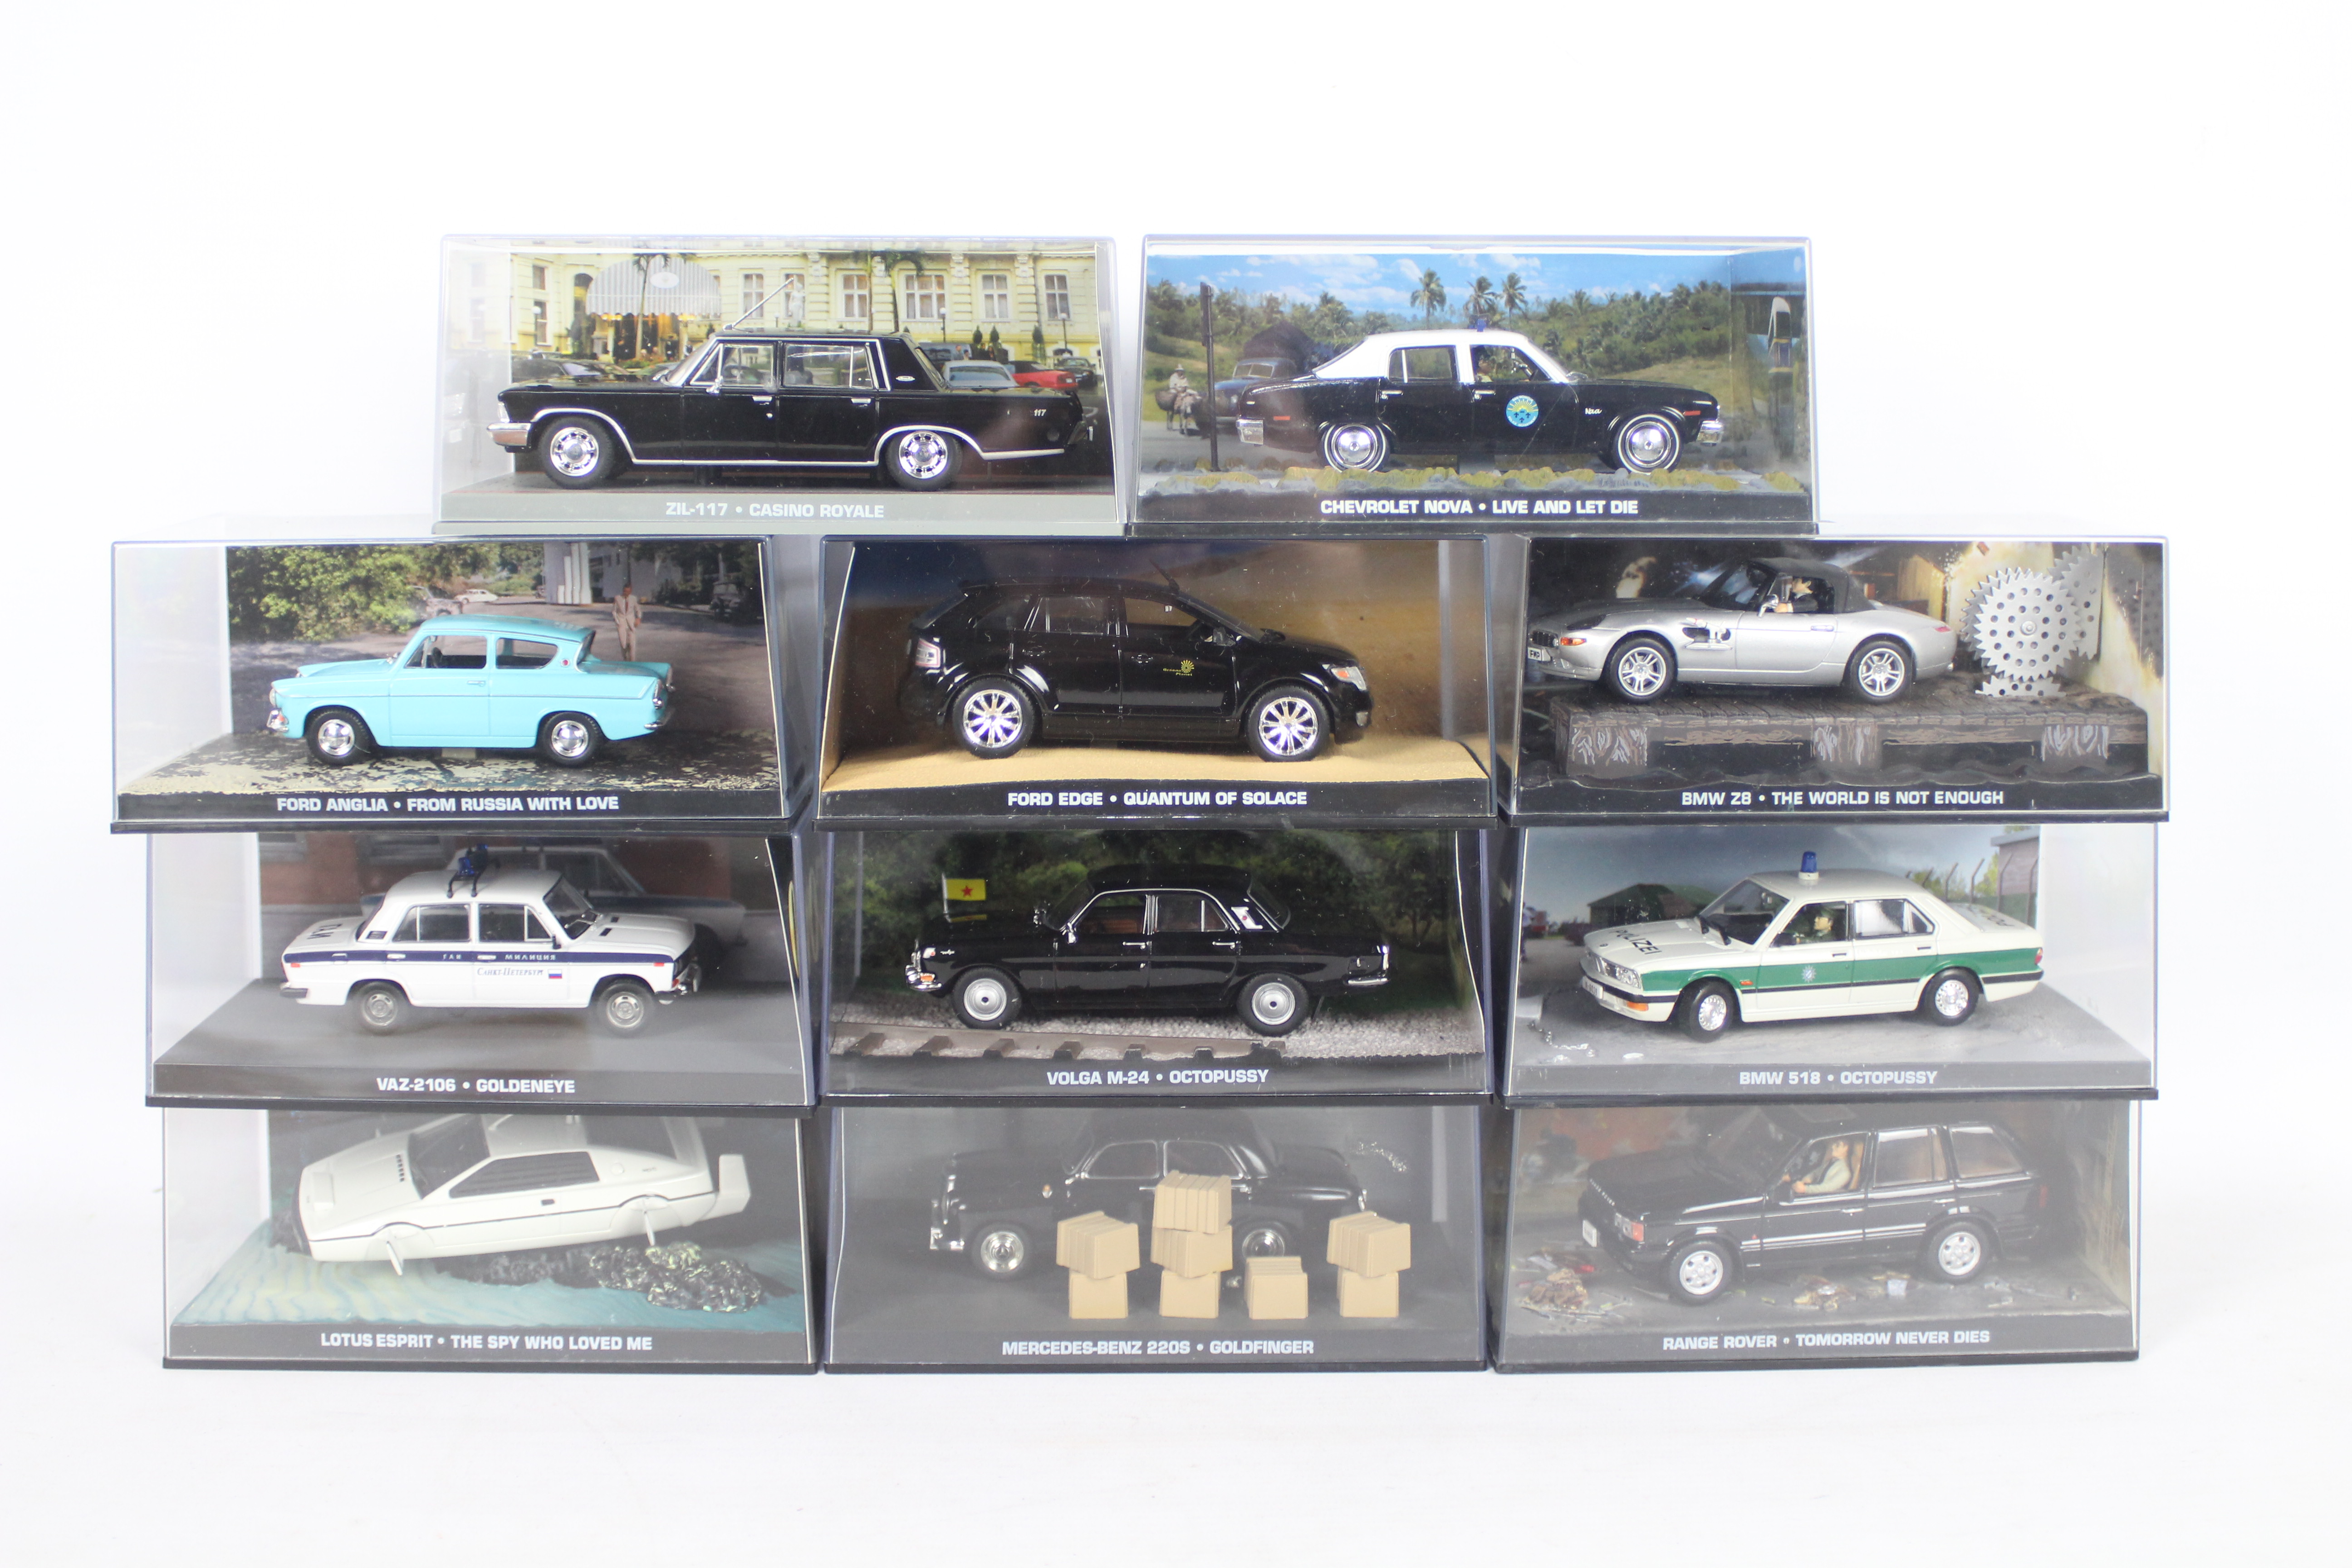 Universal Hobbies / GE Fabbri - 11 boxed diecast model vehicles from 'The James Bond Car